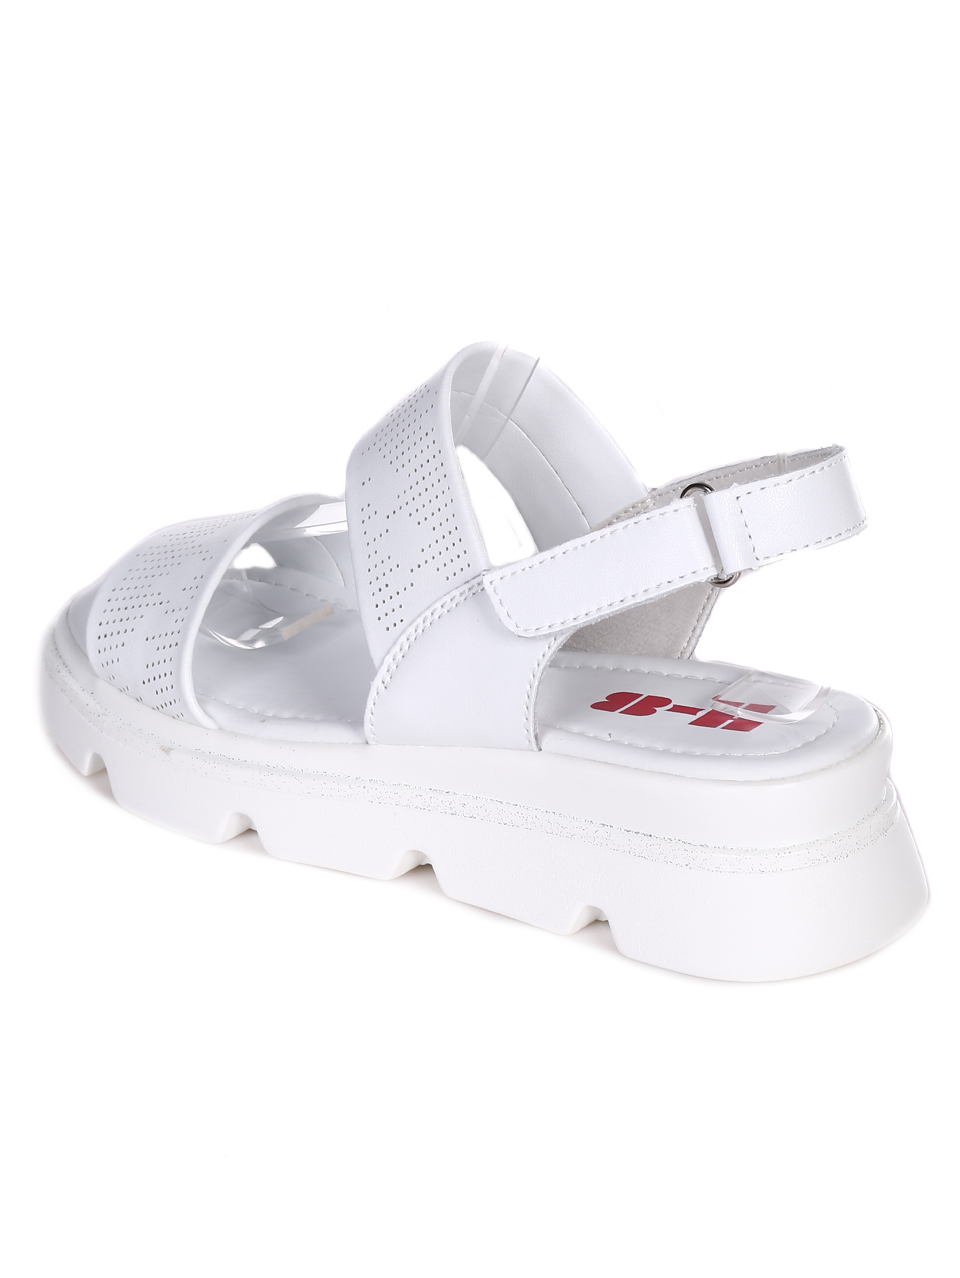 Eжедневни дамски сандали на платформа от естествена кожа 4AF-23142 white